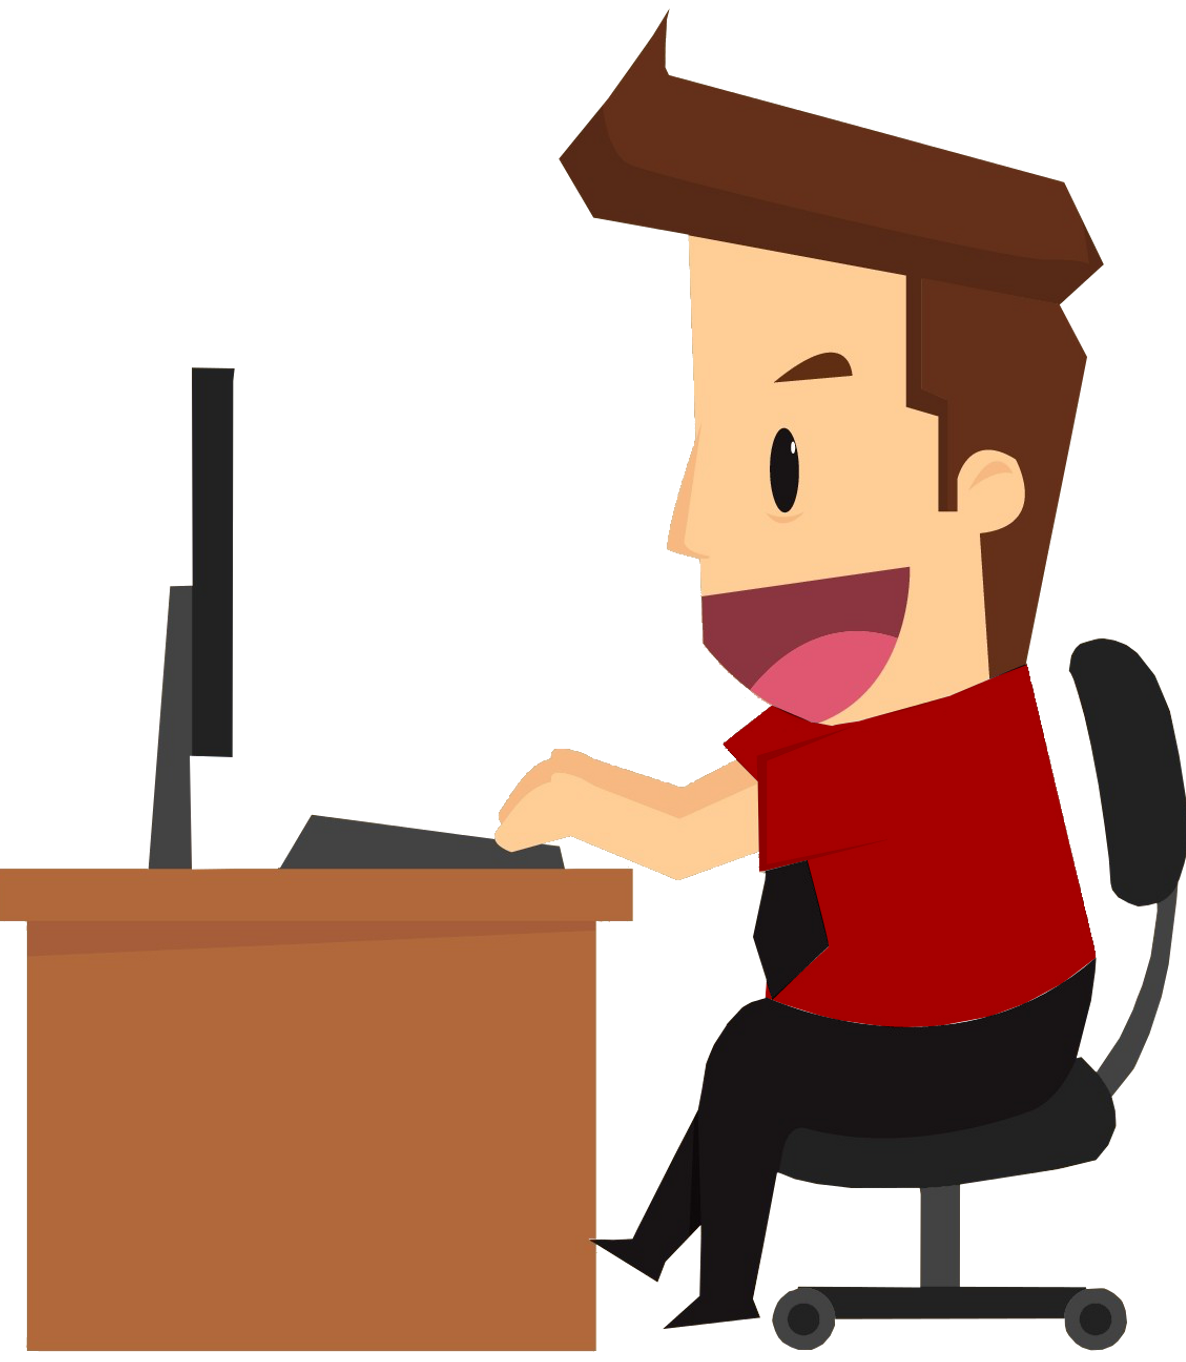 Cartoonfigur mit rotem Hemd sitzt freudig vor dem PC